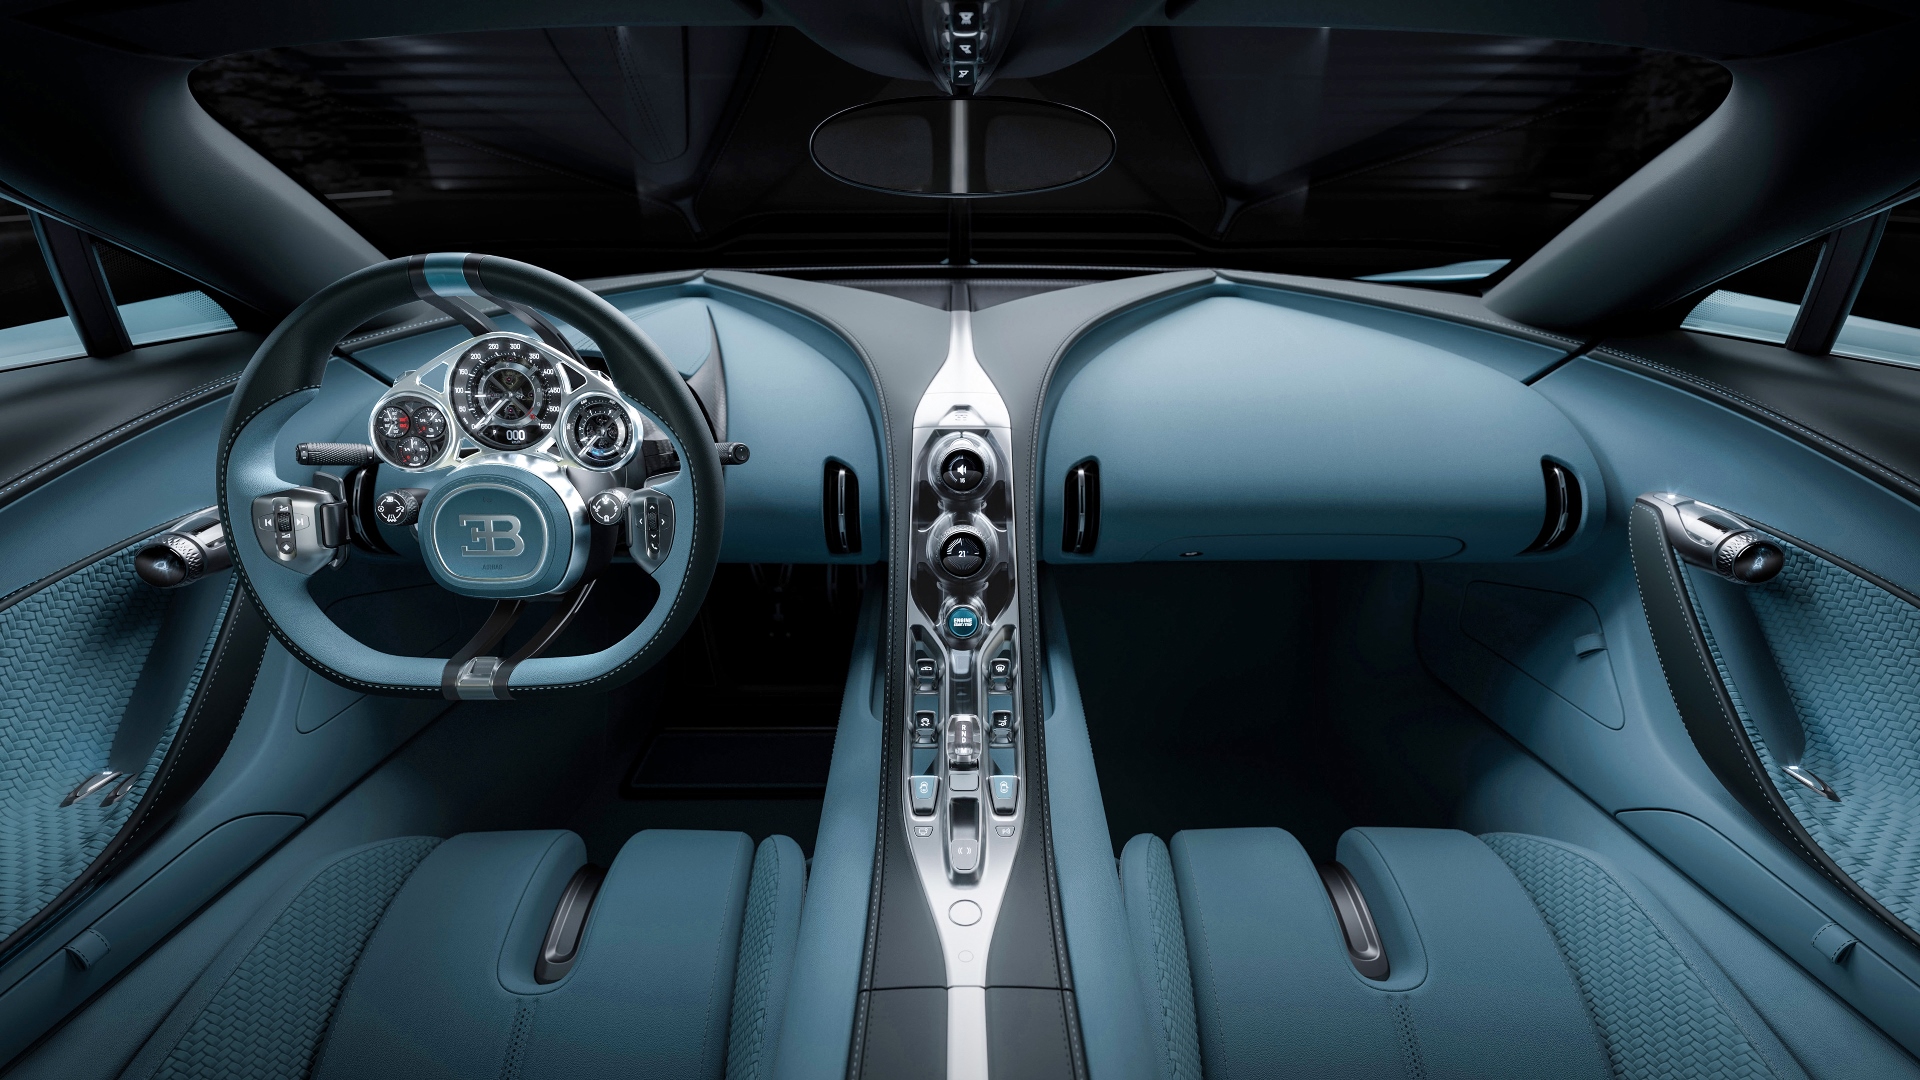 bugatti-world-premiere-presskit-images-38-cgi.jpg